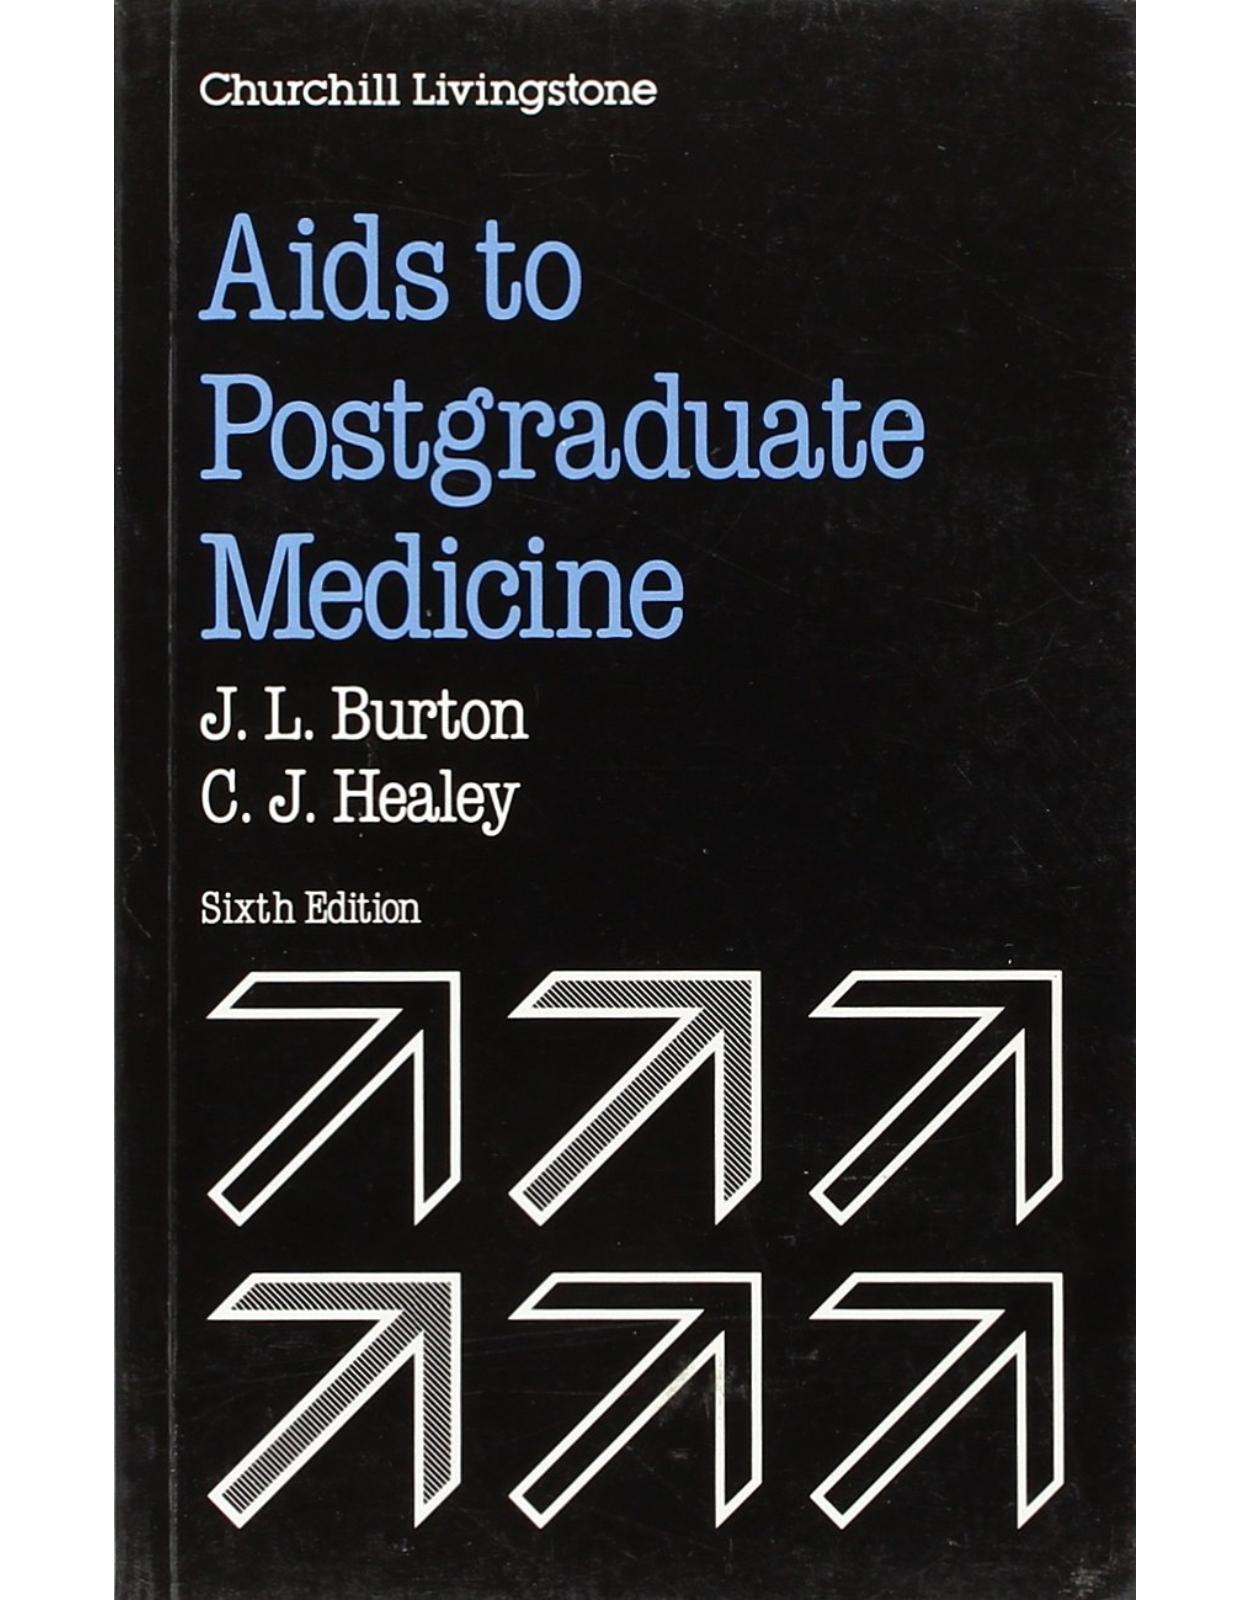 Aids to Postgraduate Medicine